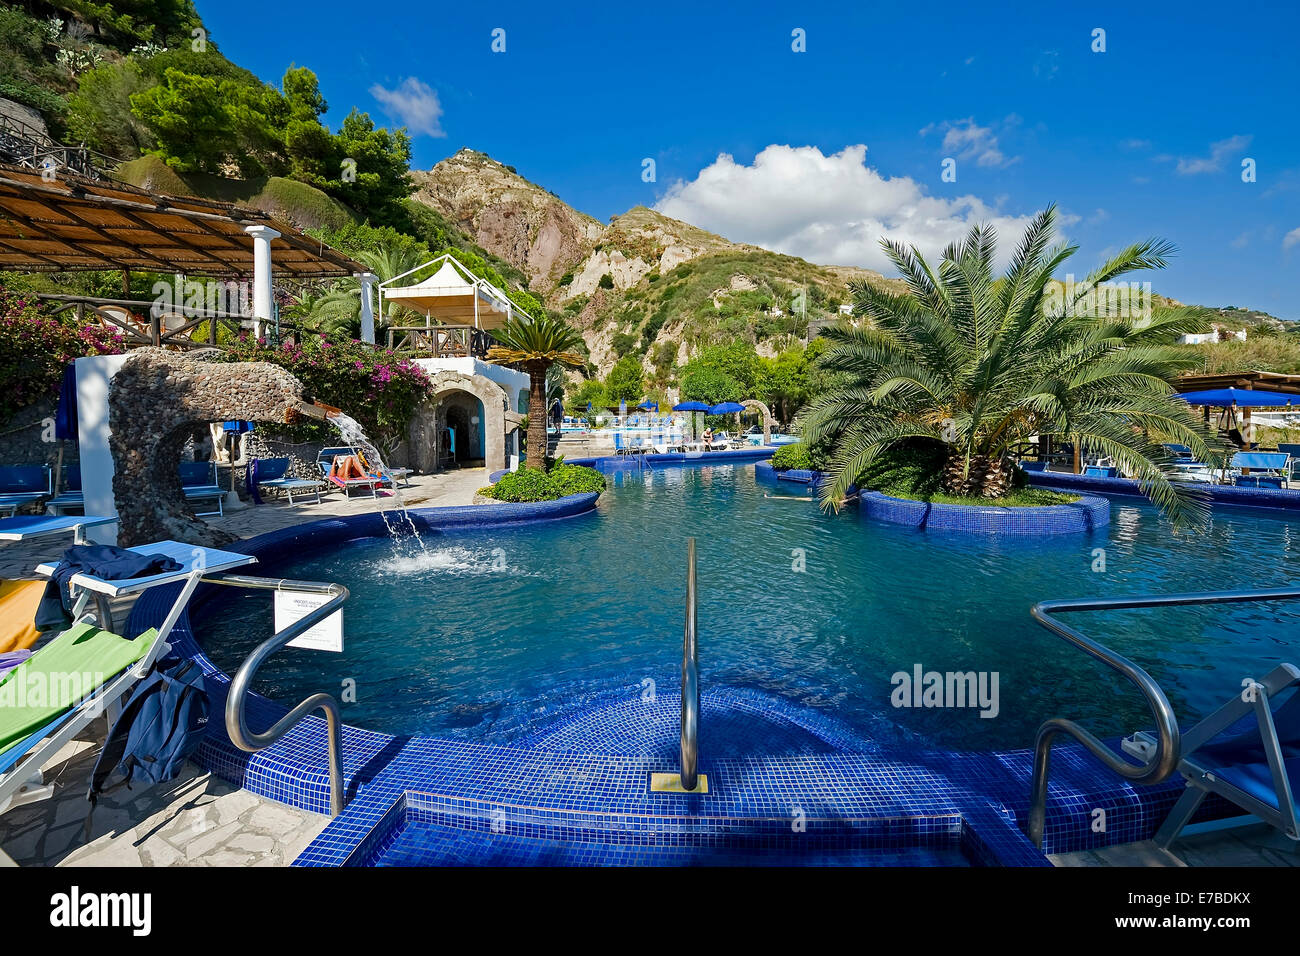 Aphrodite-Apollon-Thermalbad, Kurort, Ischia, Golf von Neapel, Italien  Stockfotografie - Alamy